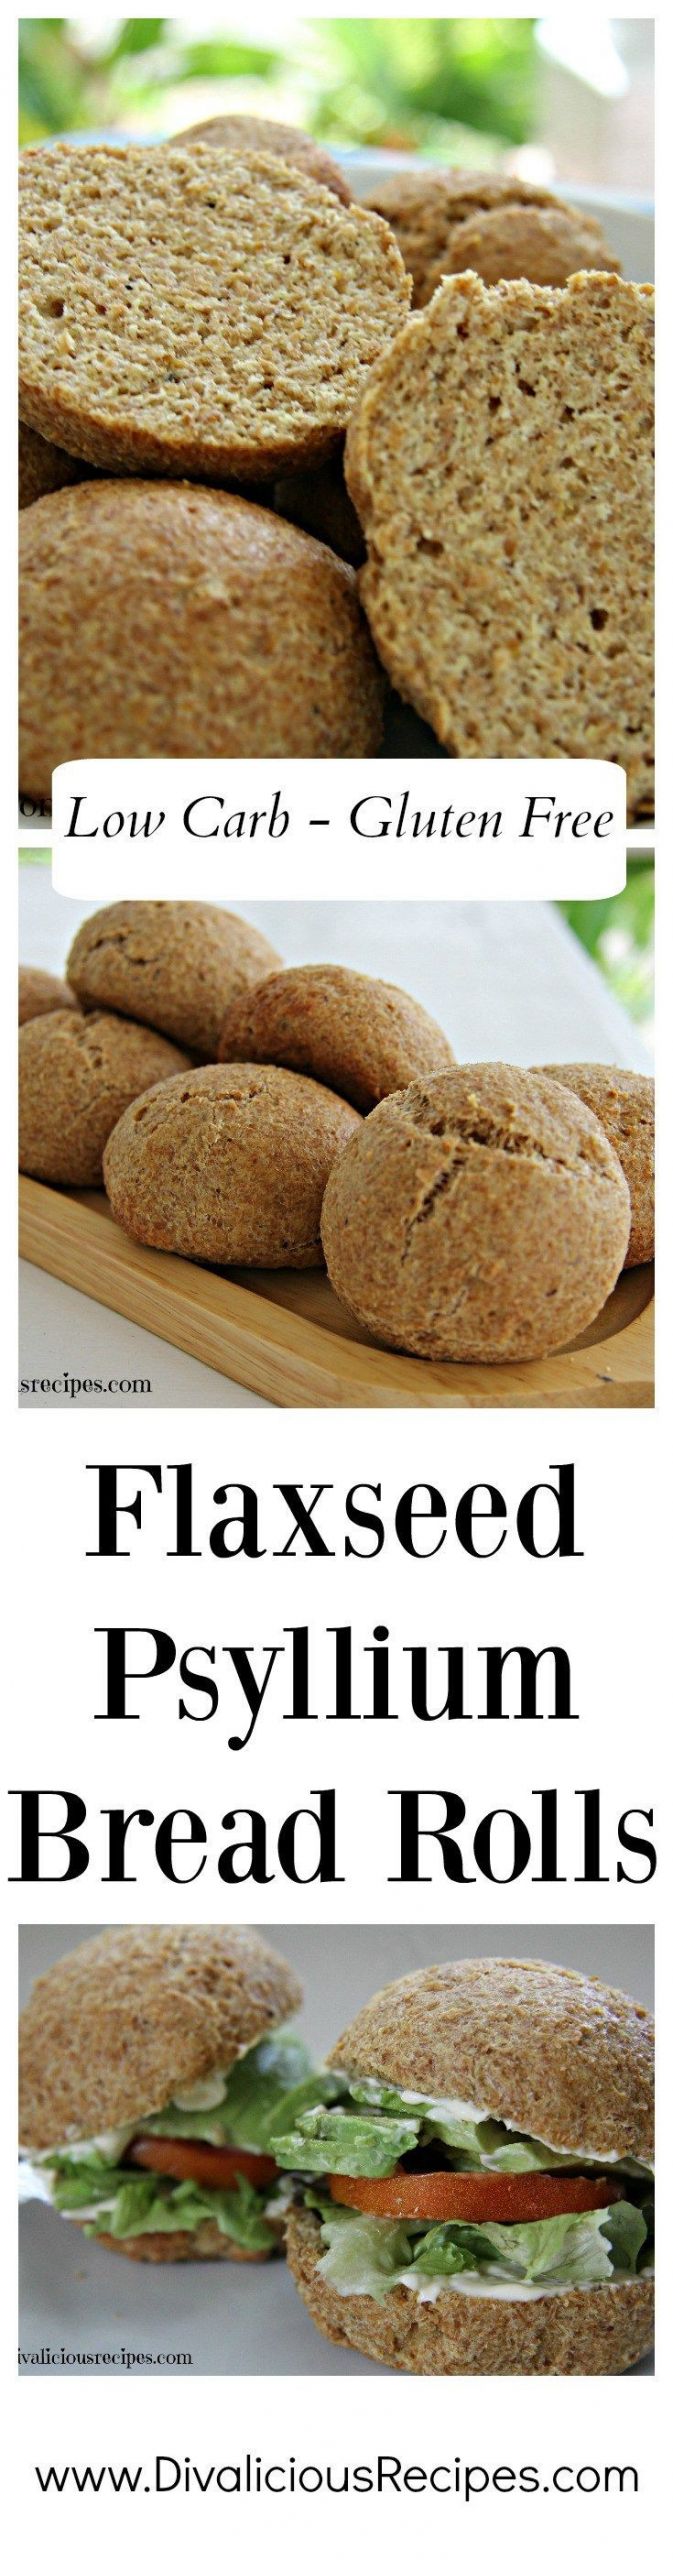 Physillium Husk Recipes Low Carb Bread
 Low Carb Flaxseed & Psyllium Bread Rolls